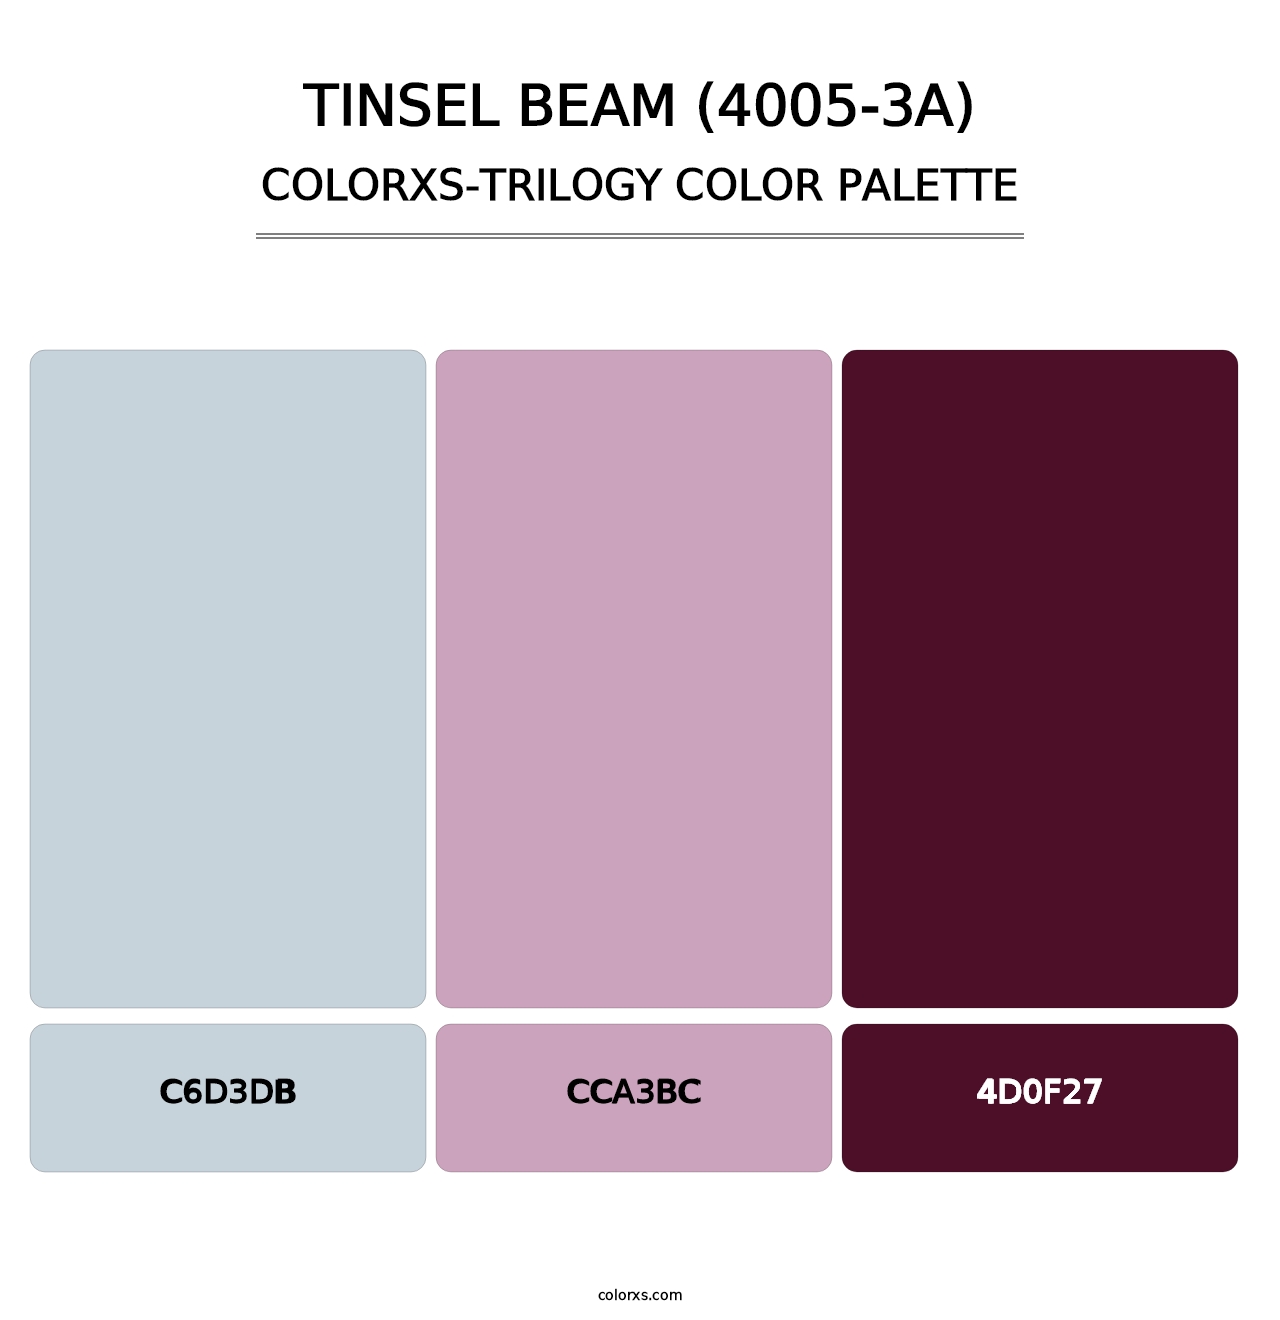 Tinsel Beam (4005-3A) - Colorxs Trilogy Palette